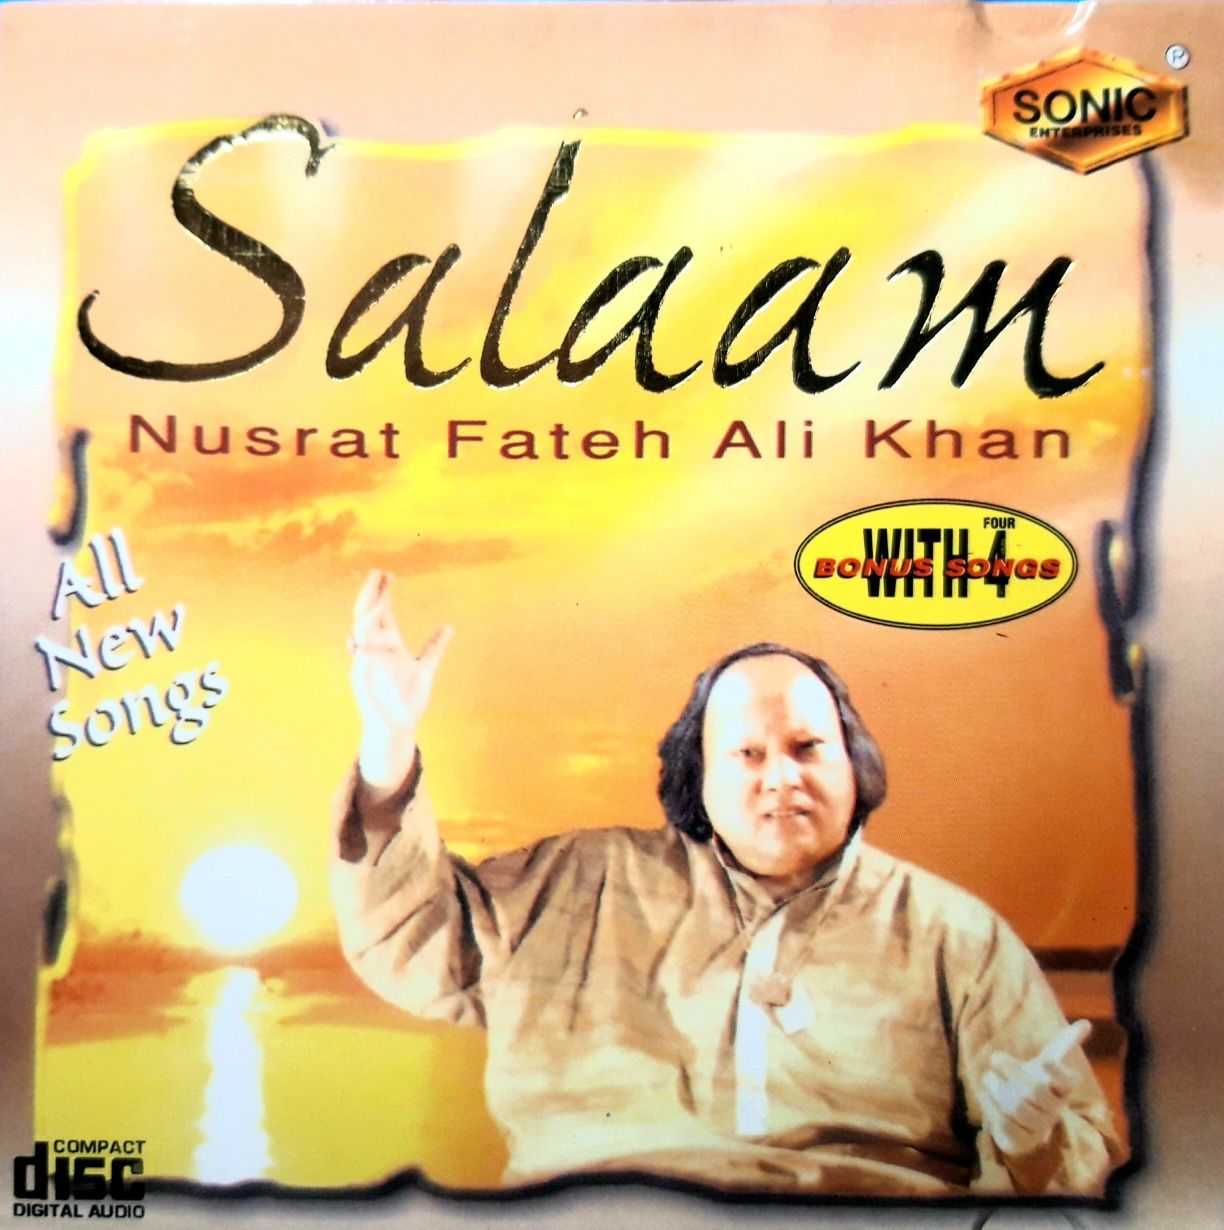 Nusrat Fateh Ali Khan - Salaam (CD, 1998)